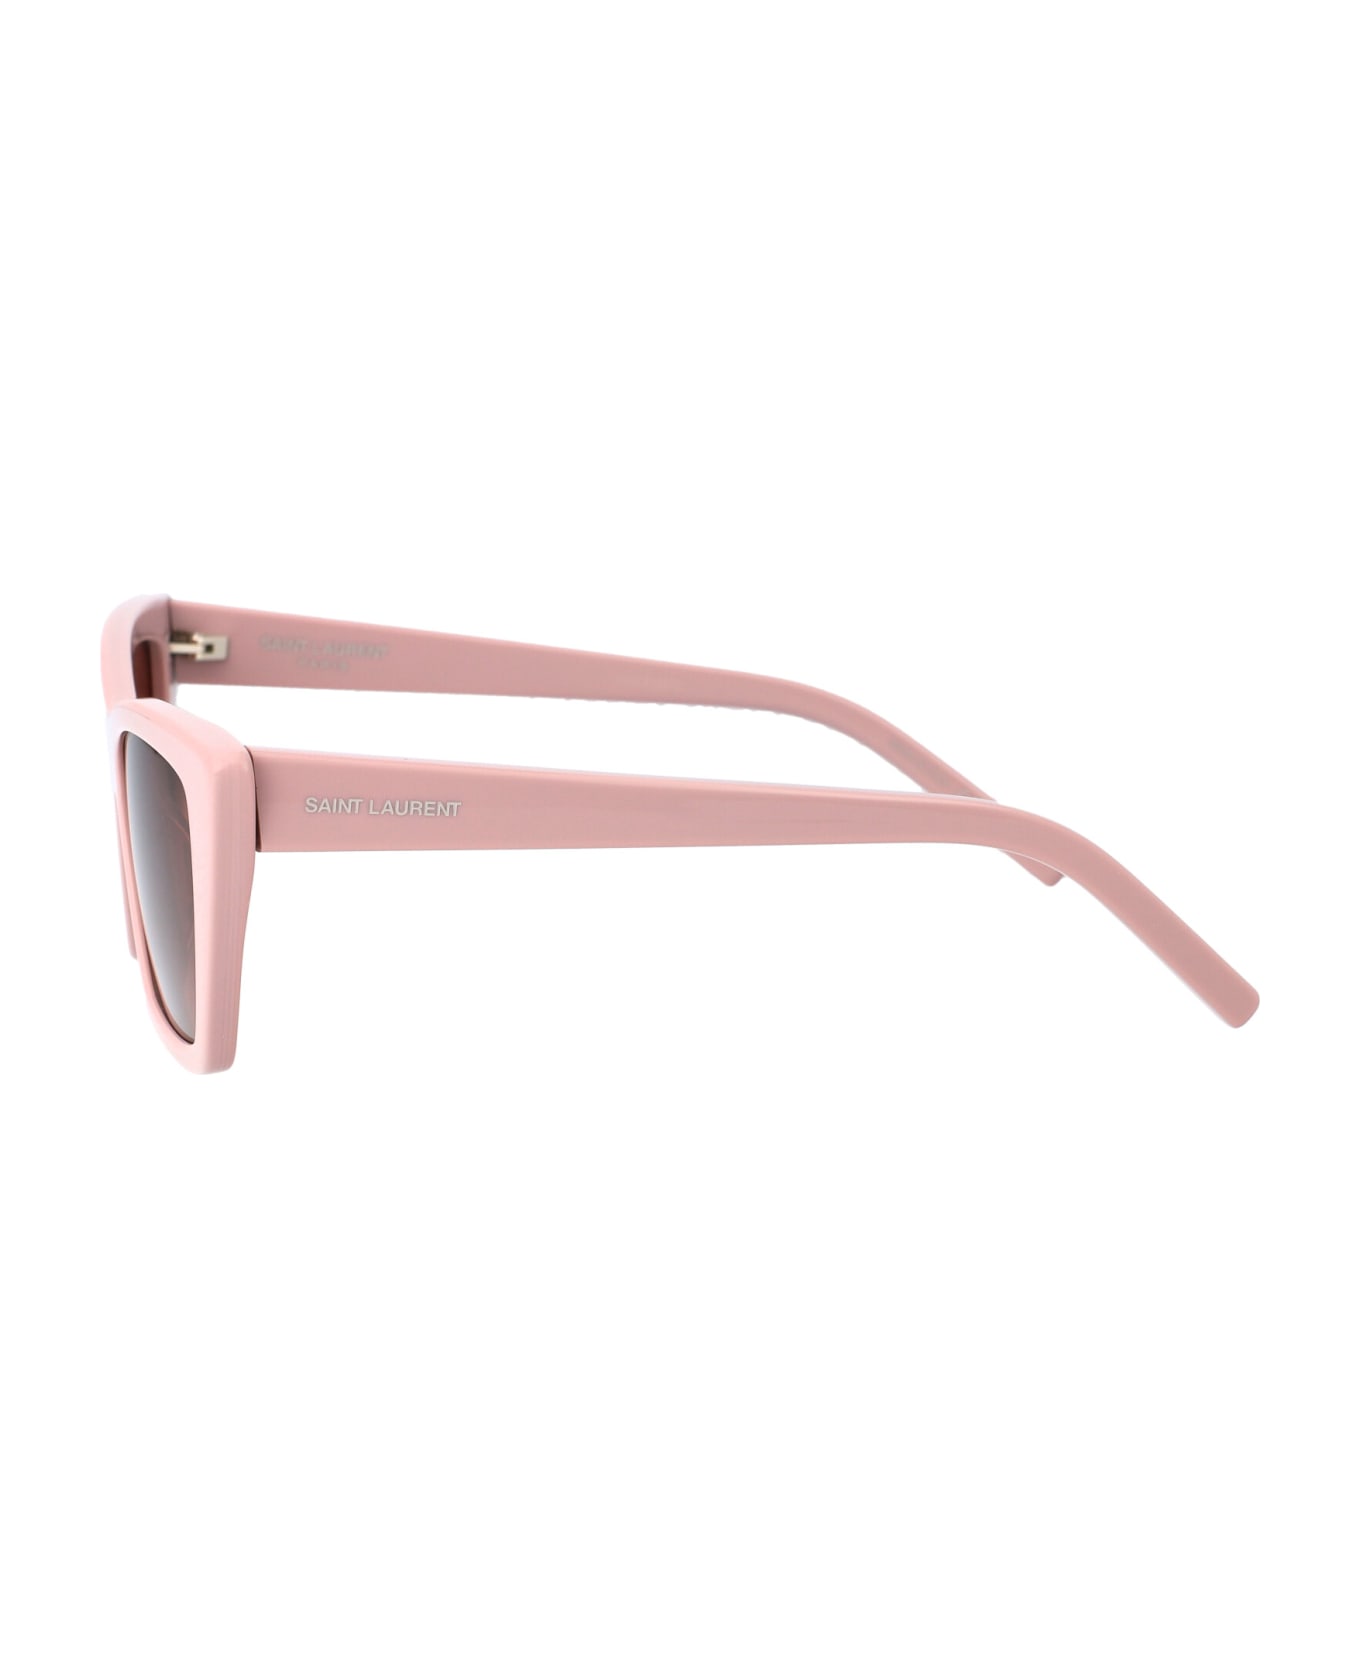 Saint Laurent Eyewear Sl 276 Mica Sunglasses - 058 PINK PINK BROWN サングラス